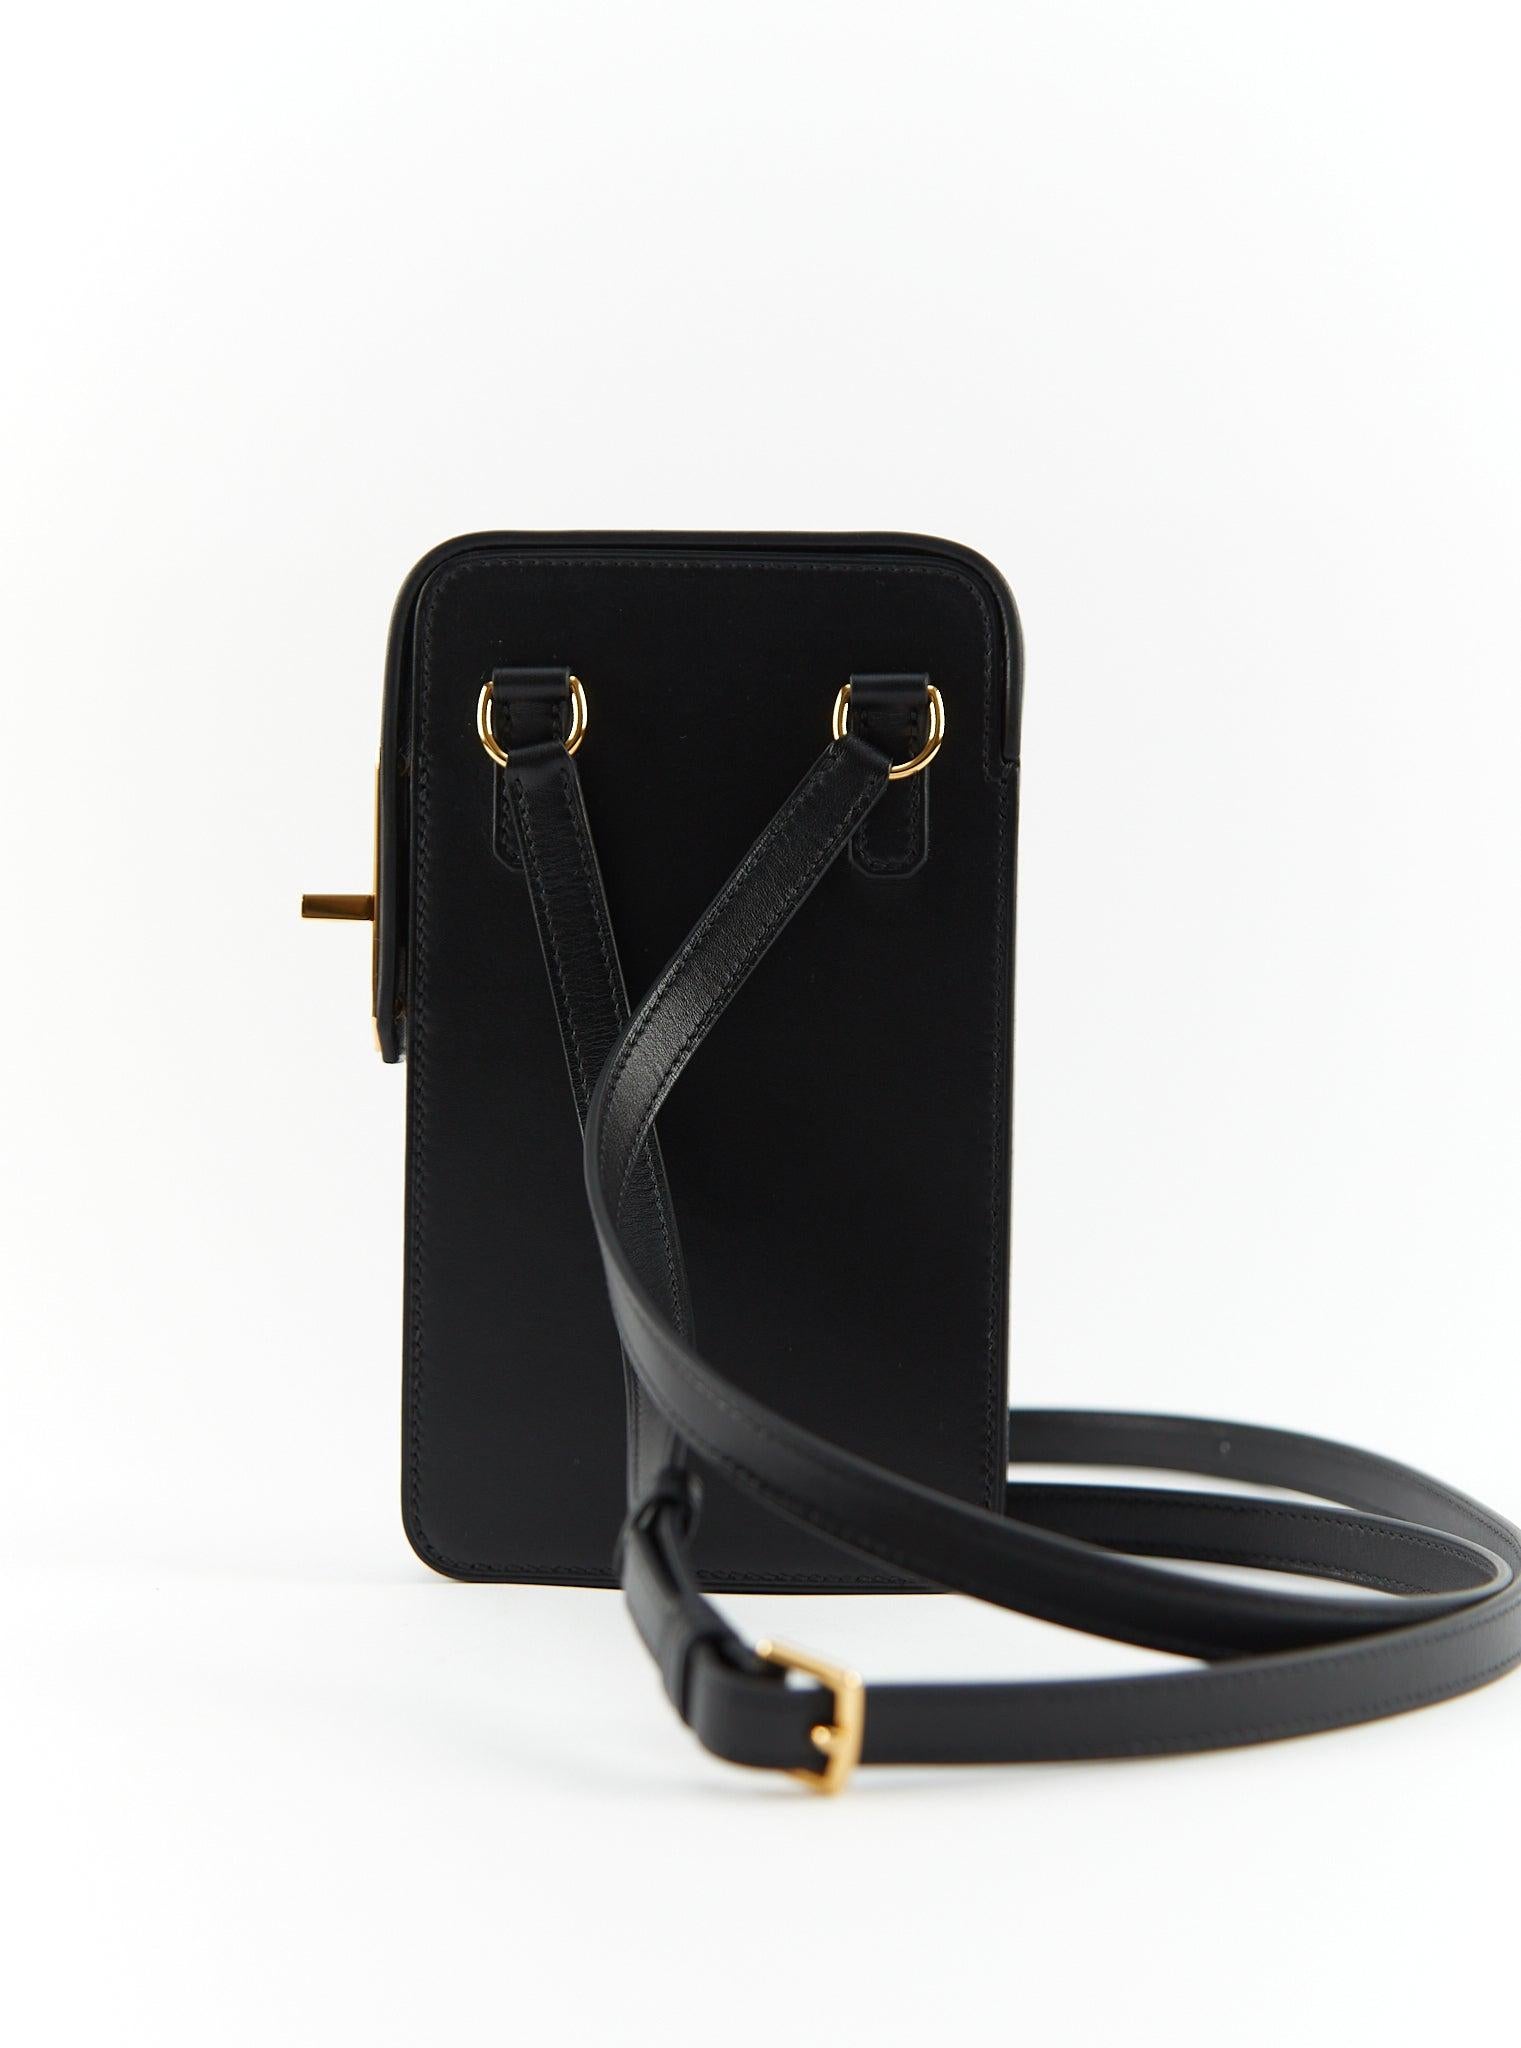 HERMÈS HERMESWAY PHONE CASE BLACK Tadelakt Leather with Gold Hardware For Sale 1